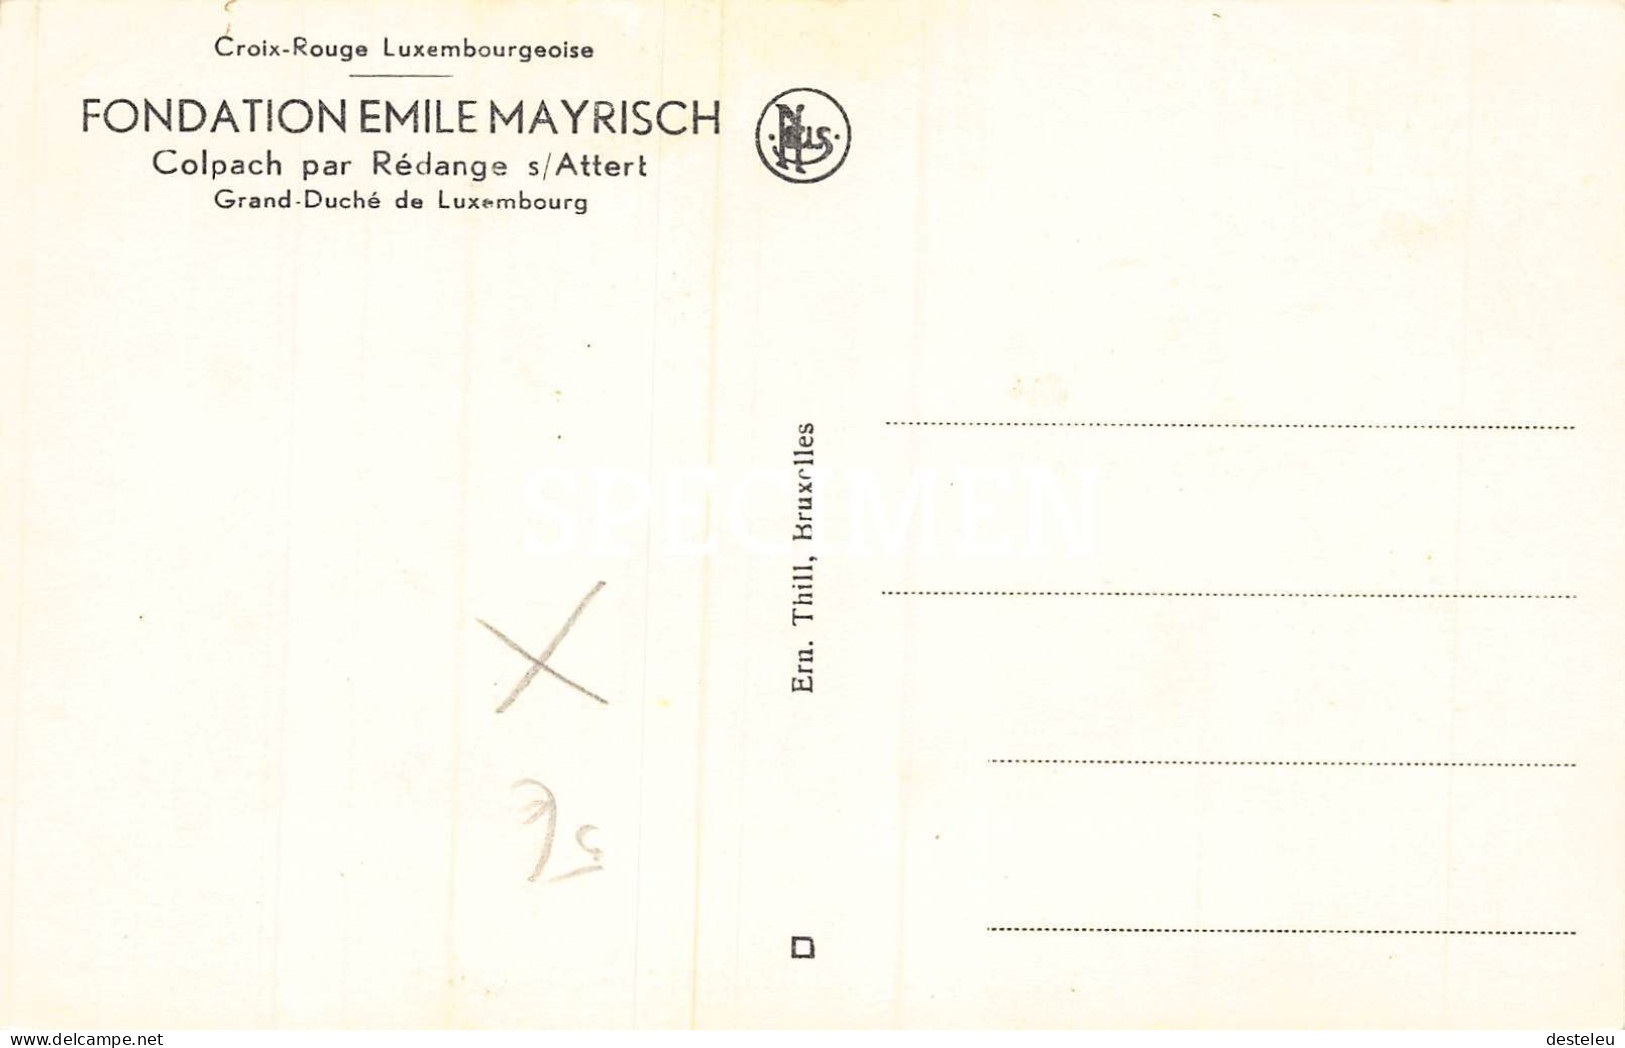 Fondation Emile Mayrisch - Colpach - Luxembourg - Rodange